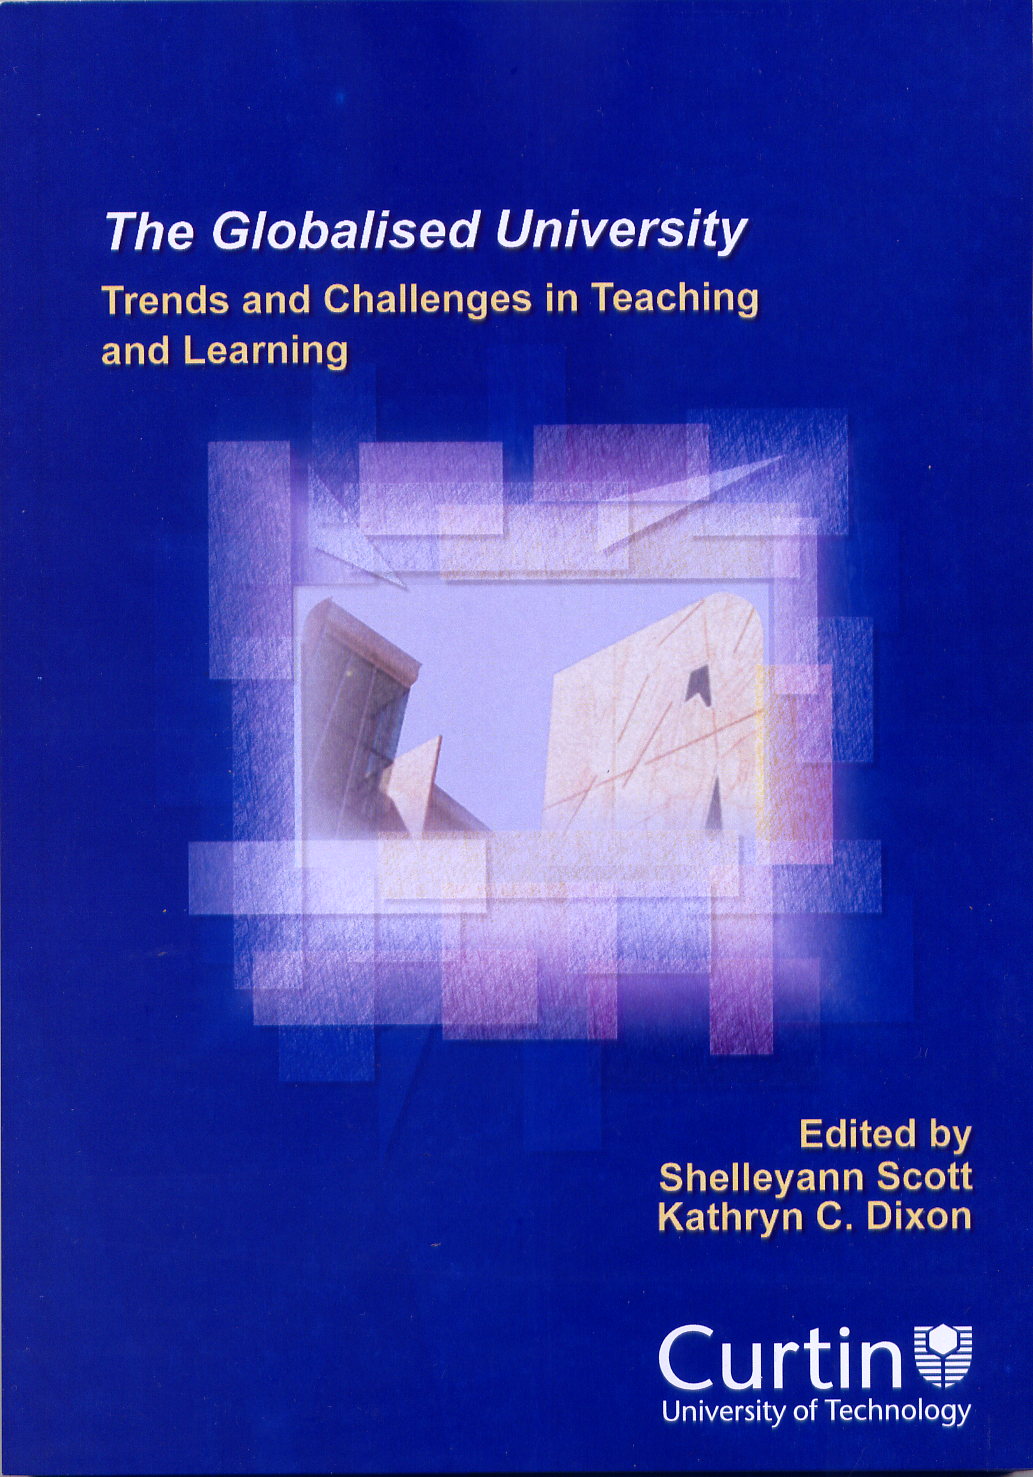 The Globalised University edited by Shelleyann Scott and Kathryn C Dixon